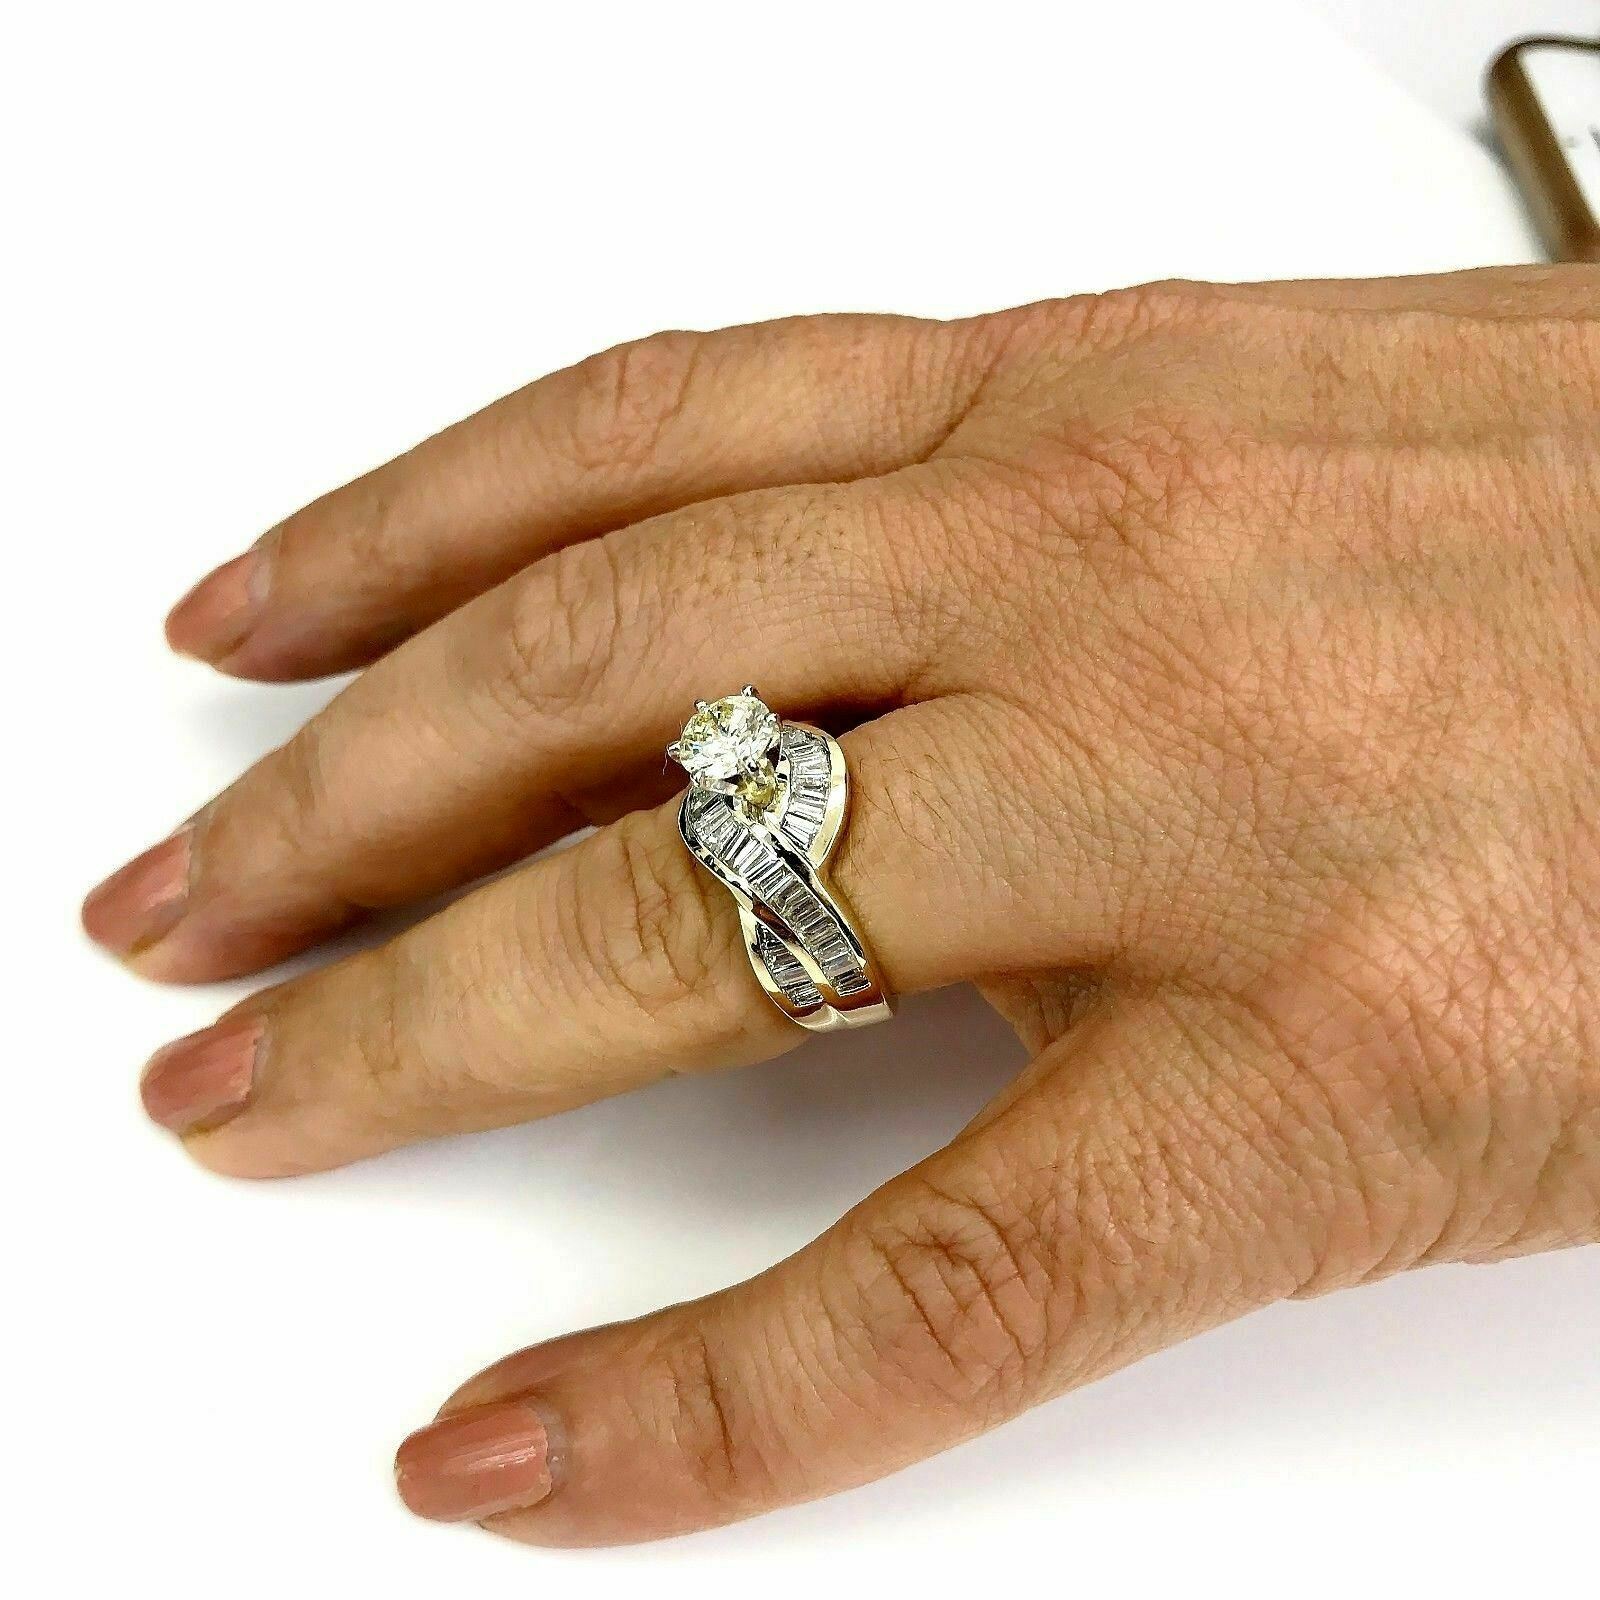 2.39 Carats t.w. Diamond Wedding/Engagement Ring 14K Gold 0.92 Carat Center